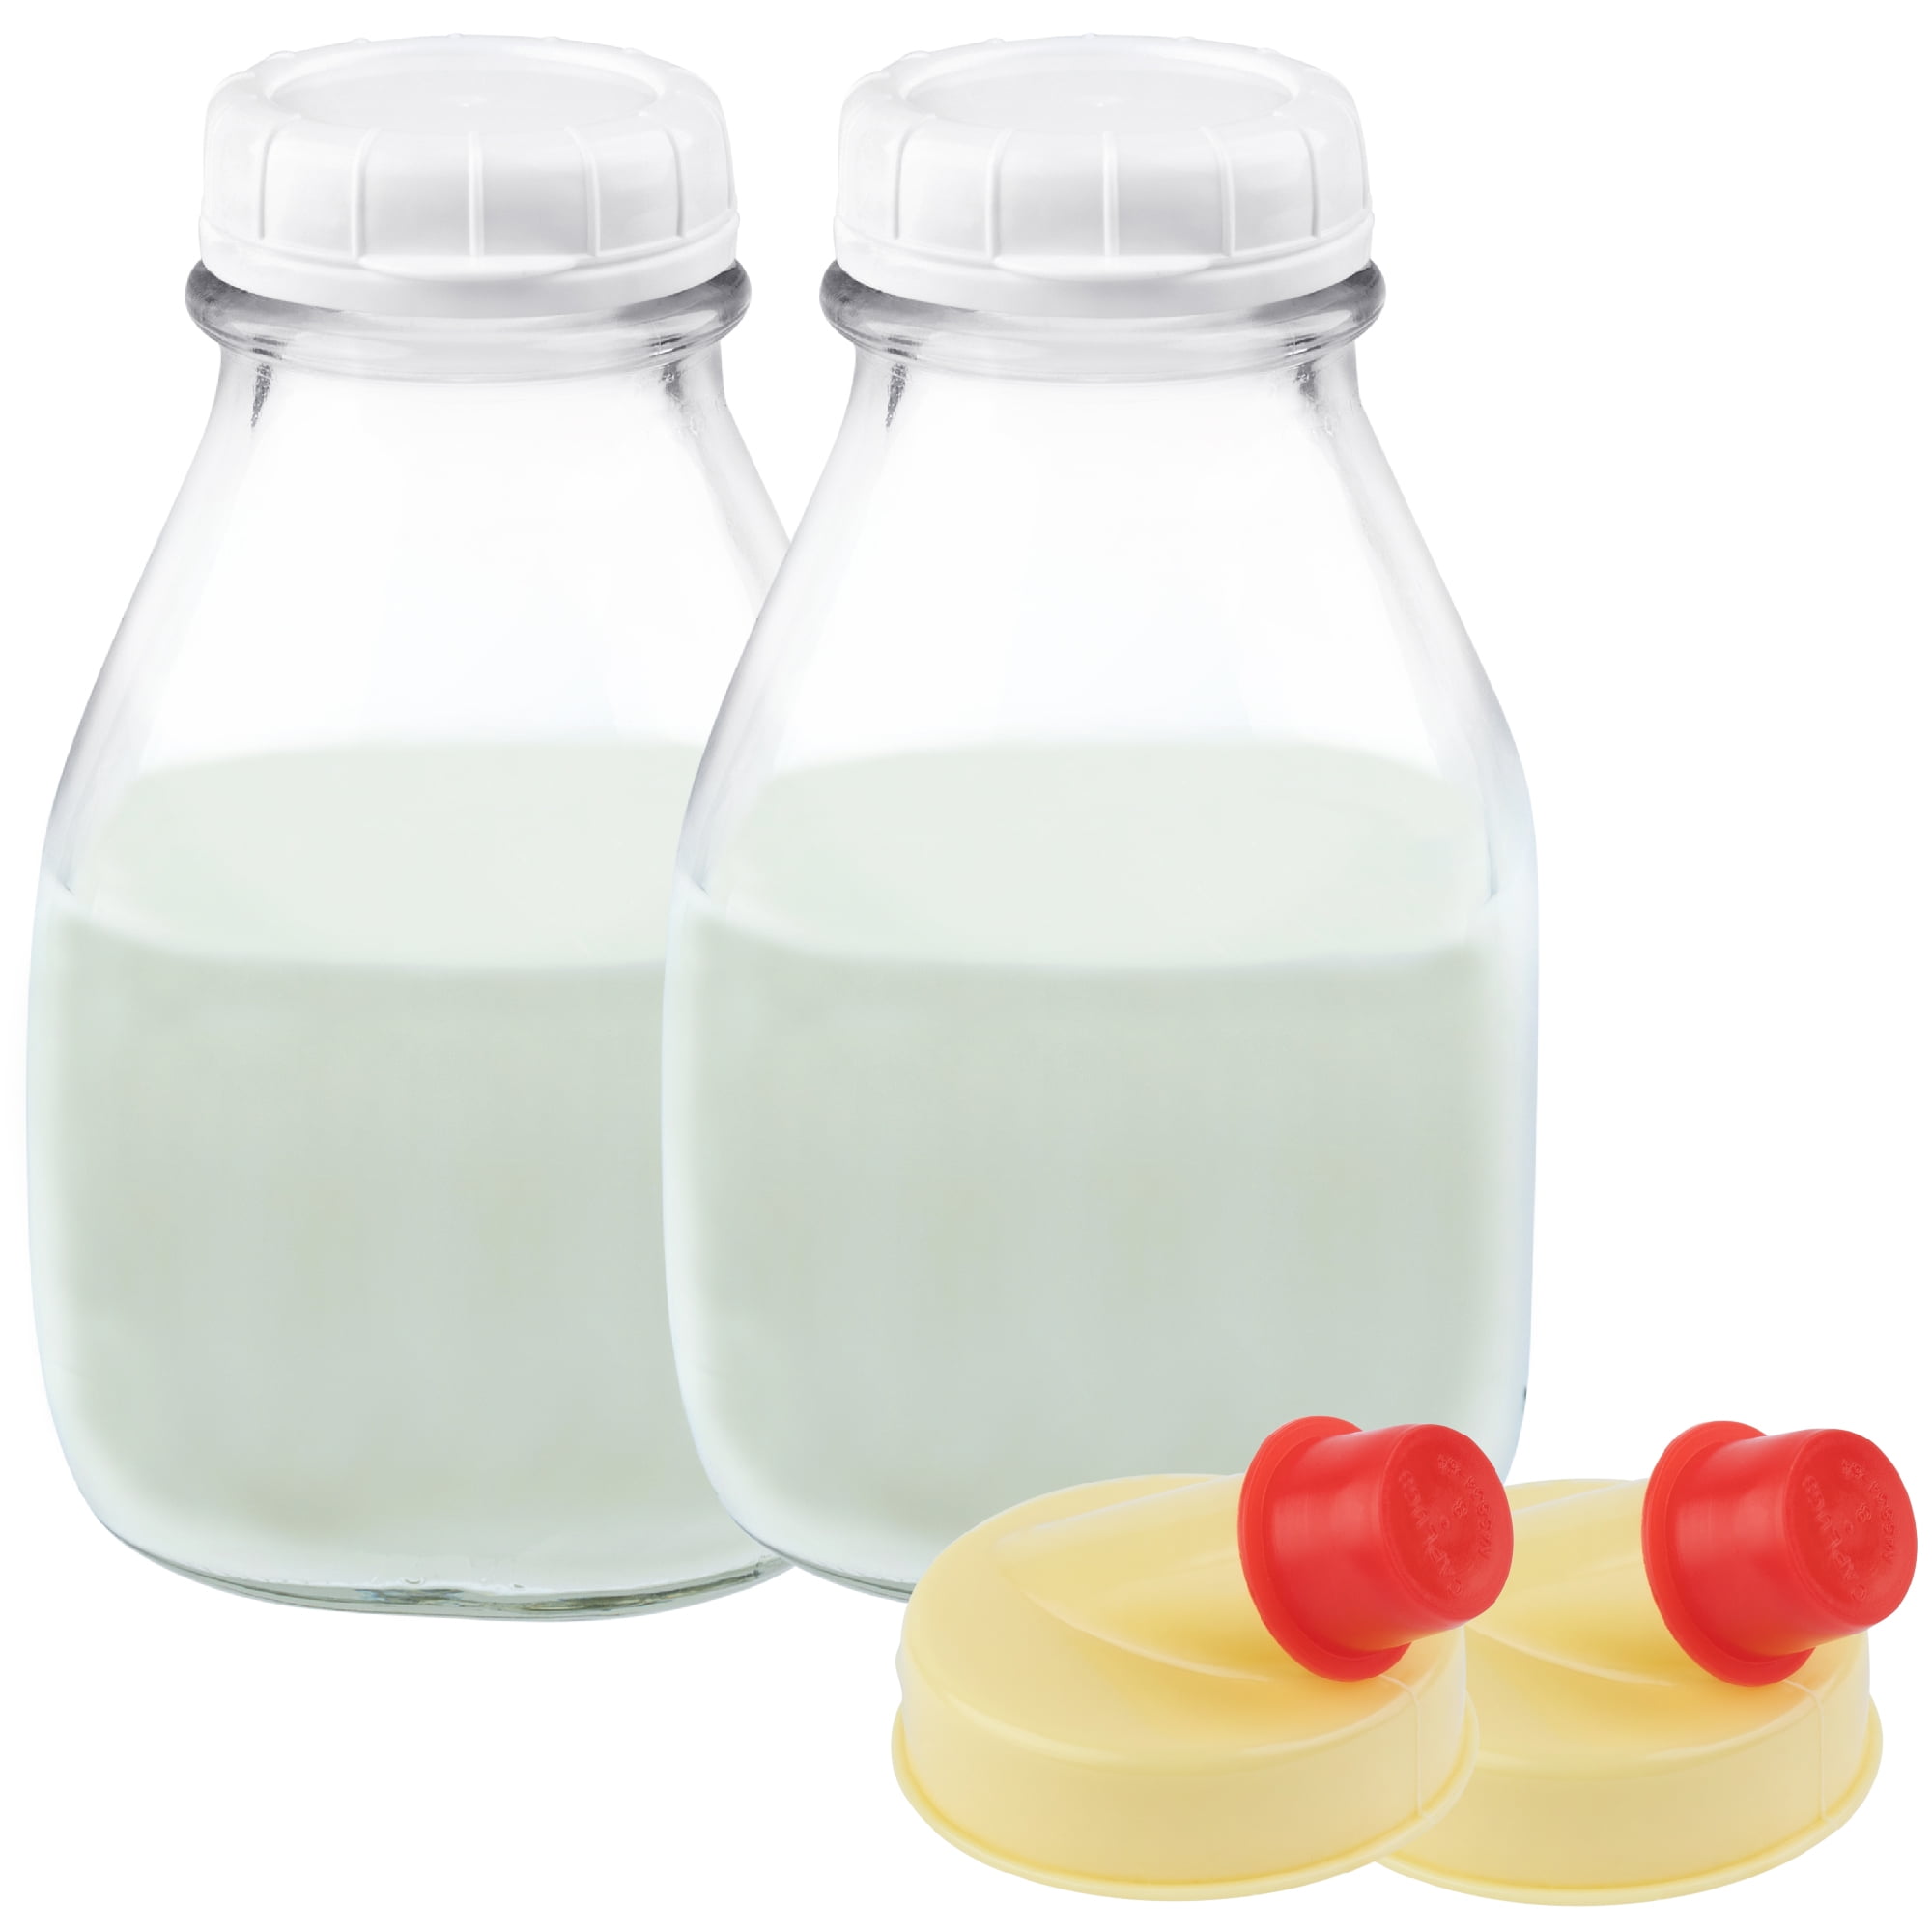 Gerrii 12 oz Milk Bottles Glass Bottles with Lids Milk Container Glass  Juice Bottles for Refrigerato…See more Gerrii 12 oz Milk Bottles Glass  Bottles